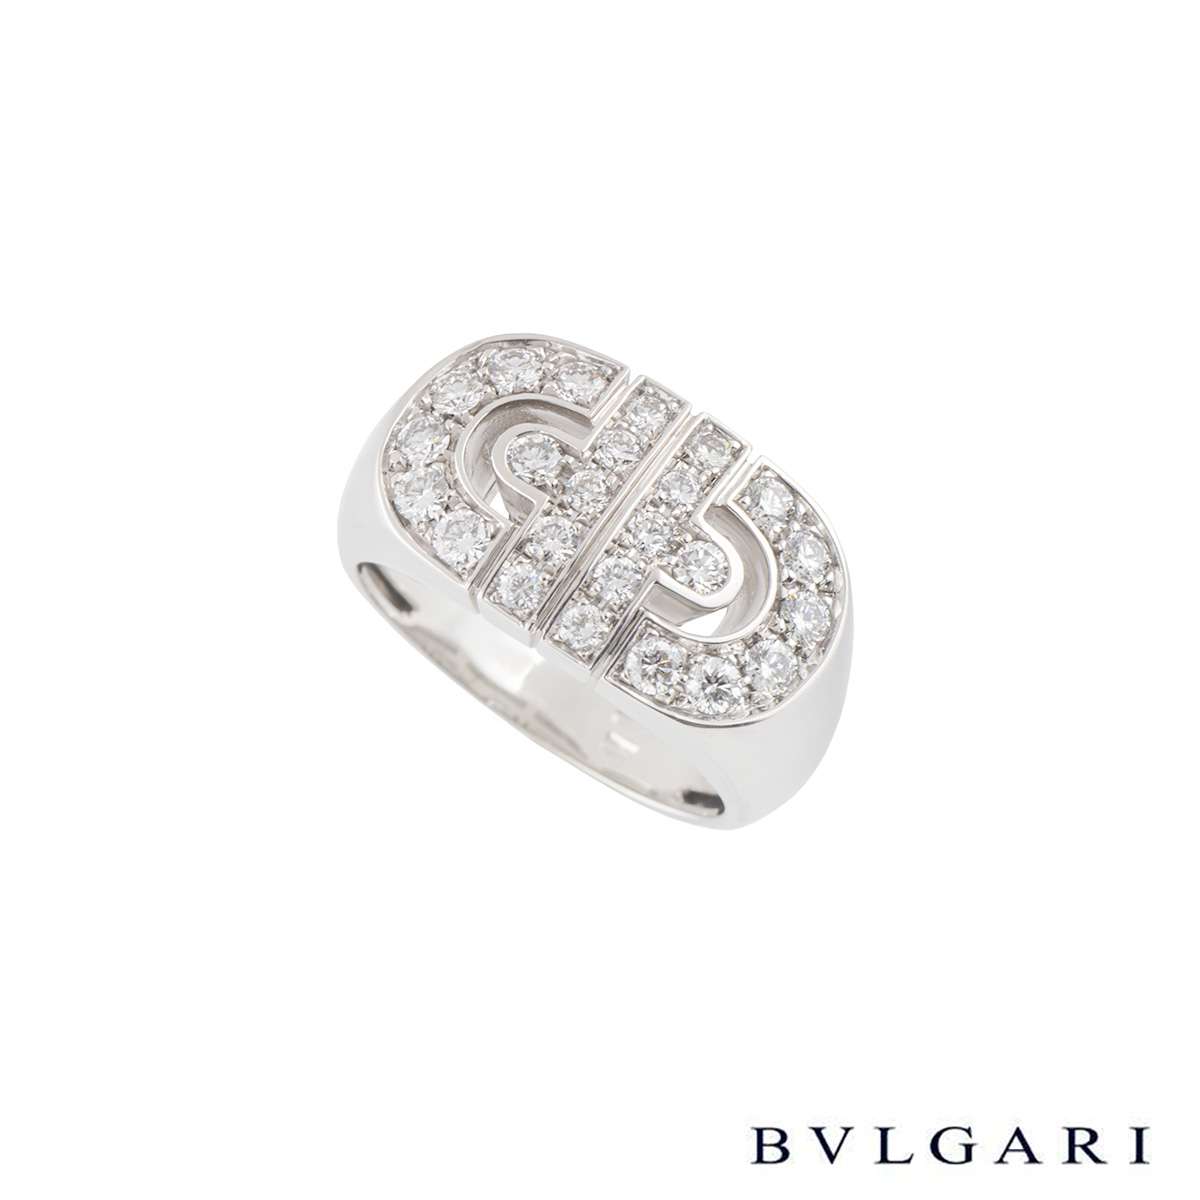 Bvlgari BVLGARI Parentesi White Gold Band Ring Size 53 